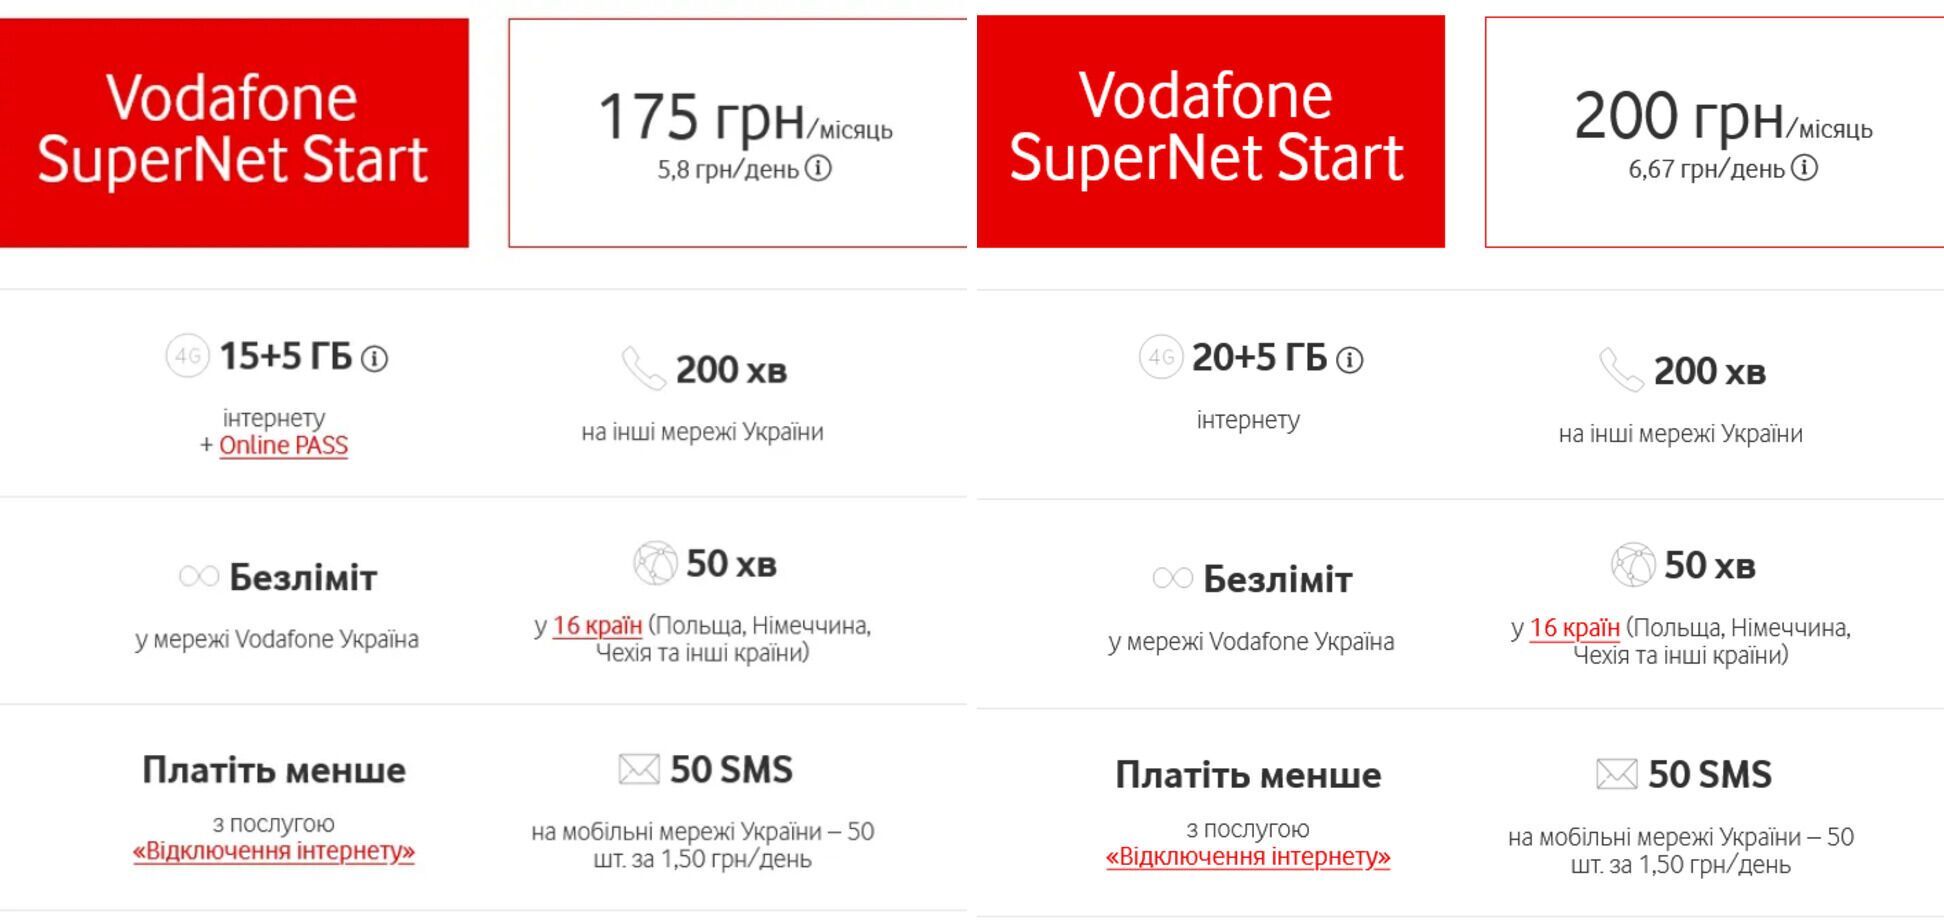 Вартість тарифу SuperNet Start збільшилась на 25 грн/місяць